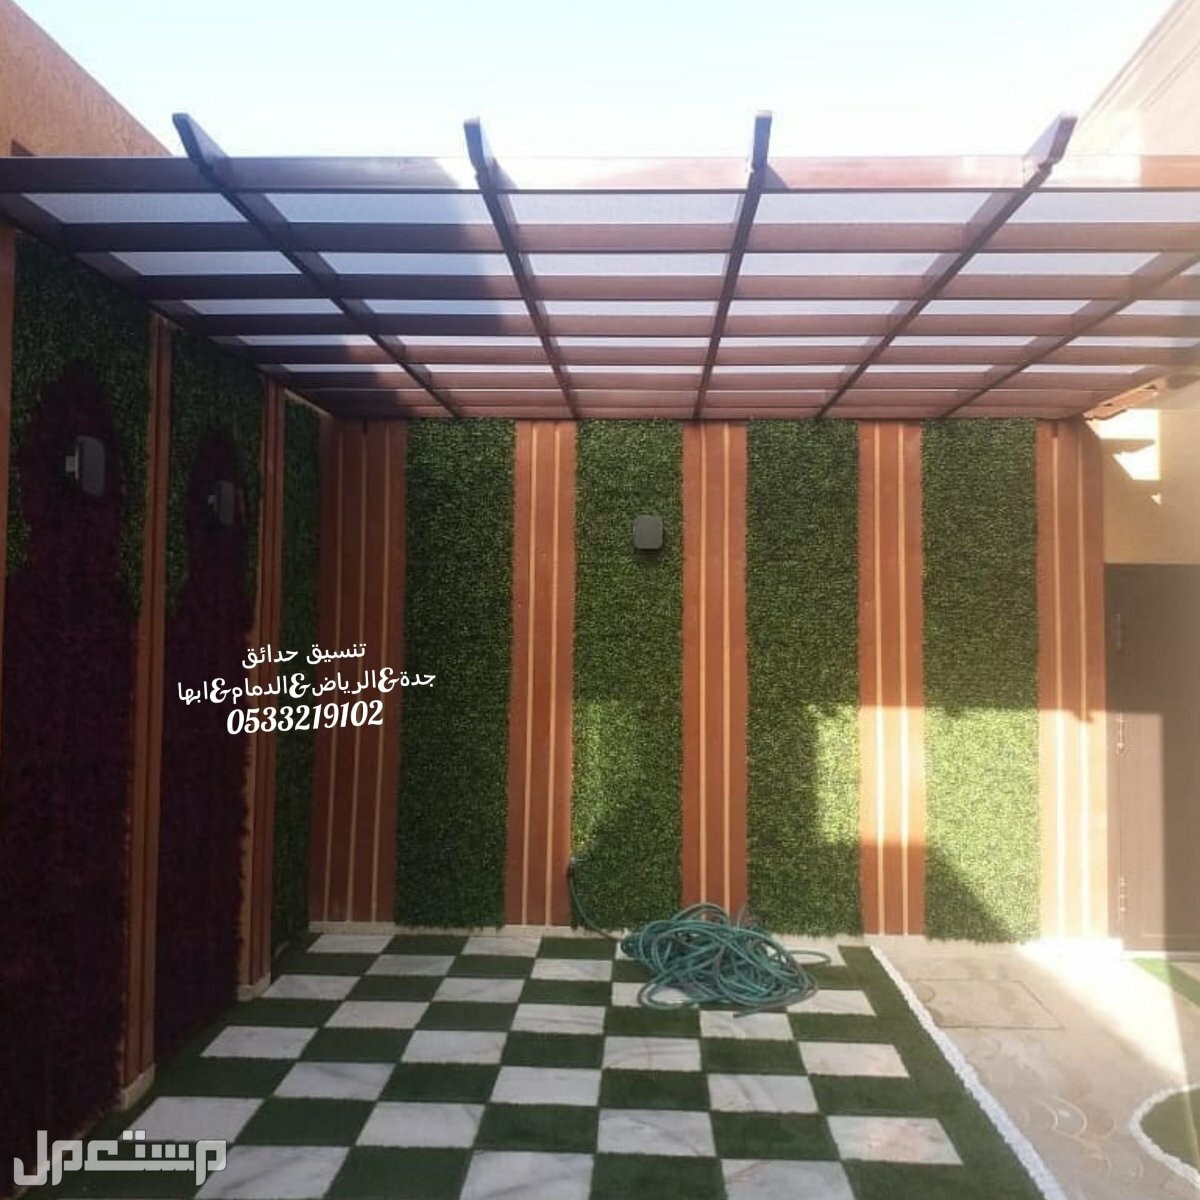 صور نوافير منزلية عشب جدارى تركيب مظلات تصميم شلالات حدائق جدة